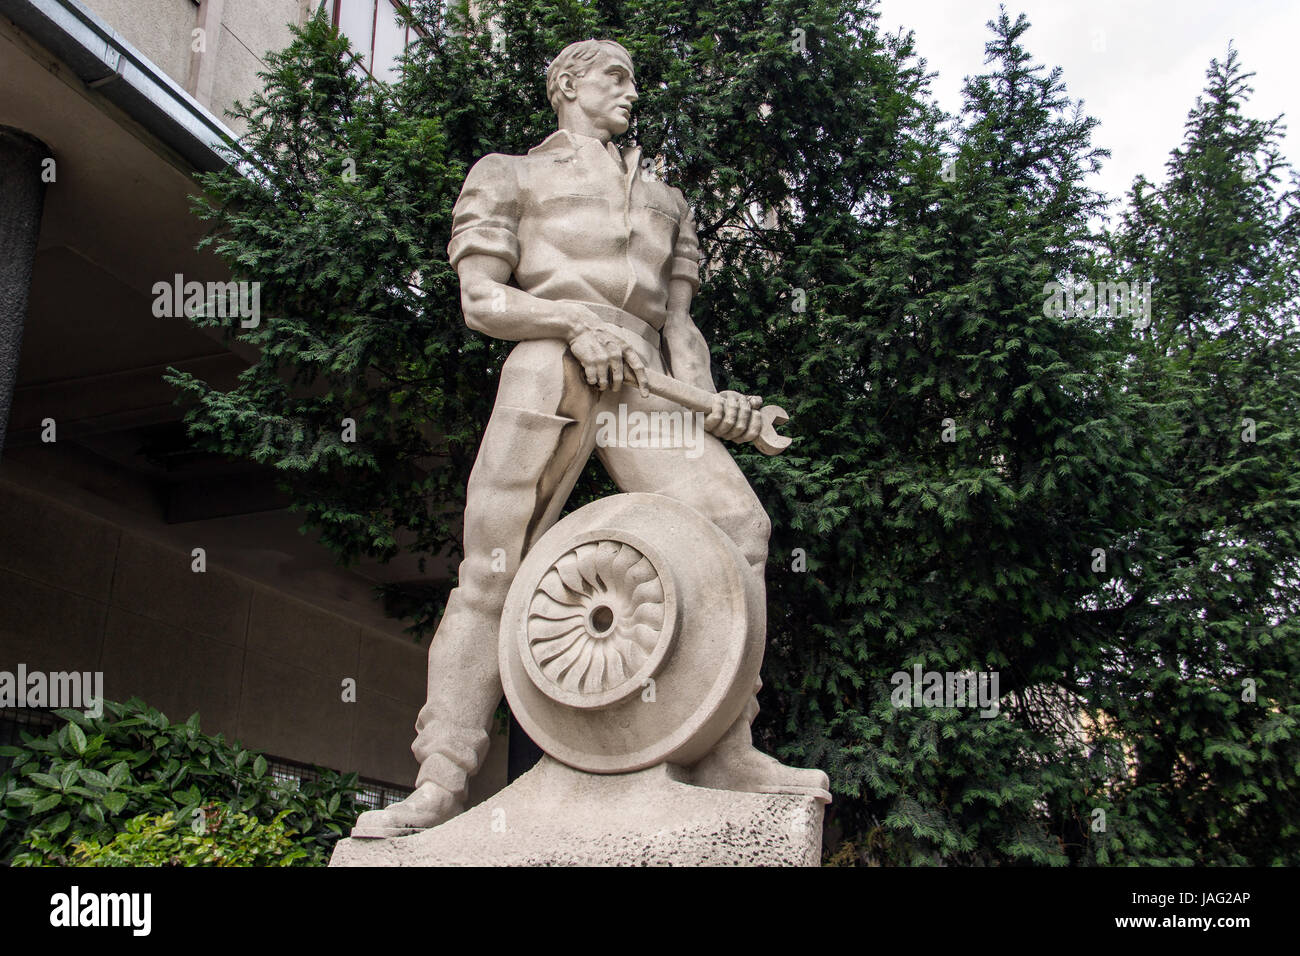 Belgrade, Serbia - Social Realism style stone statue of the Working Man from the Yugoslavian Communist era Stock Photo